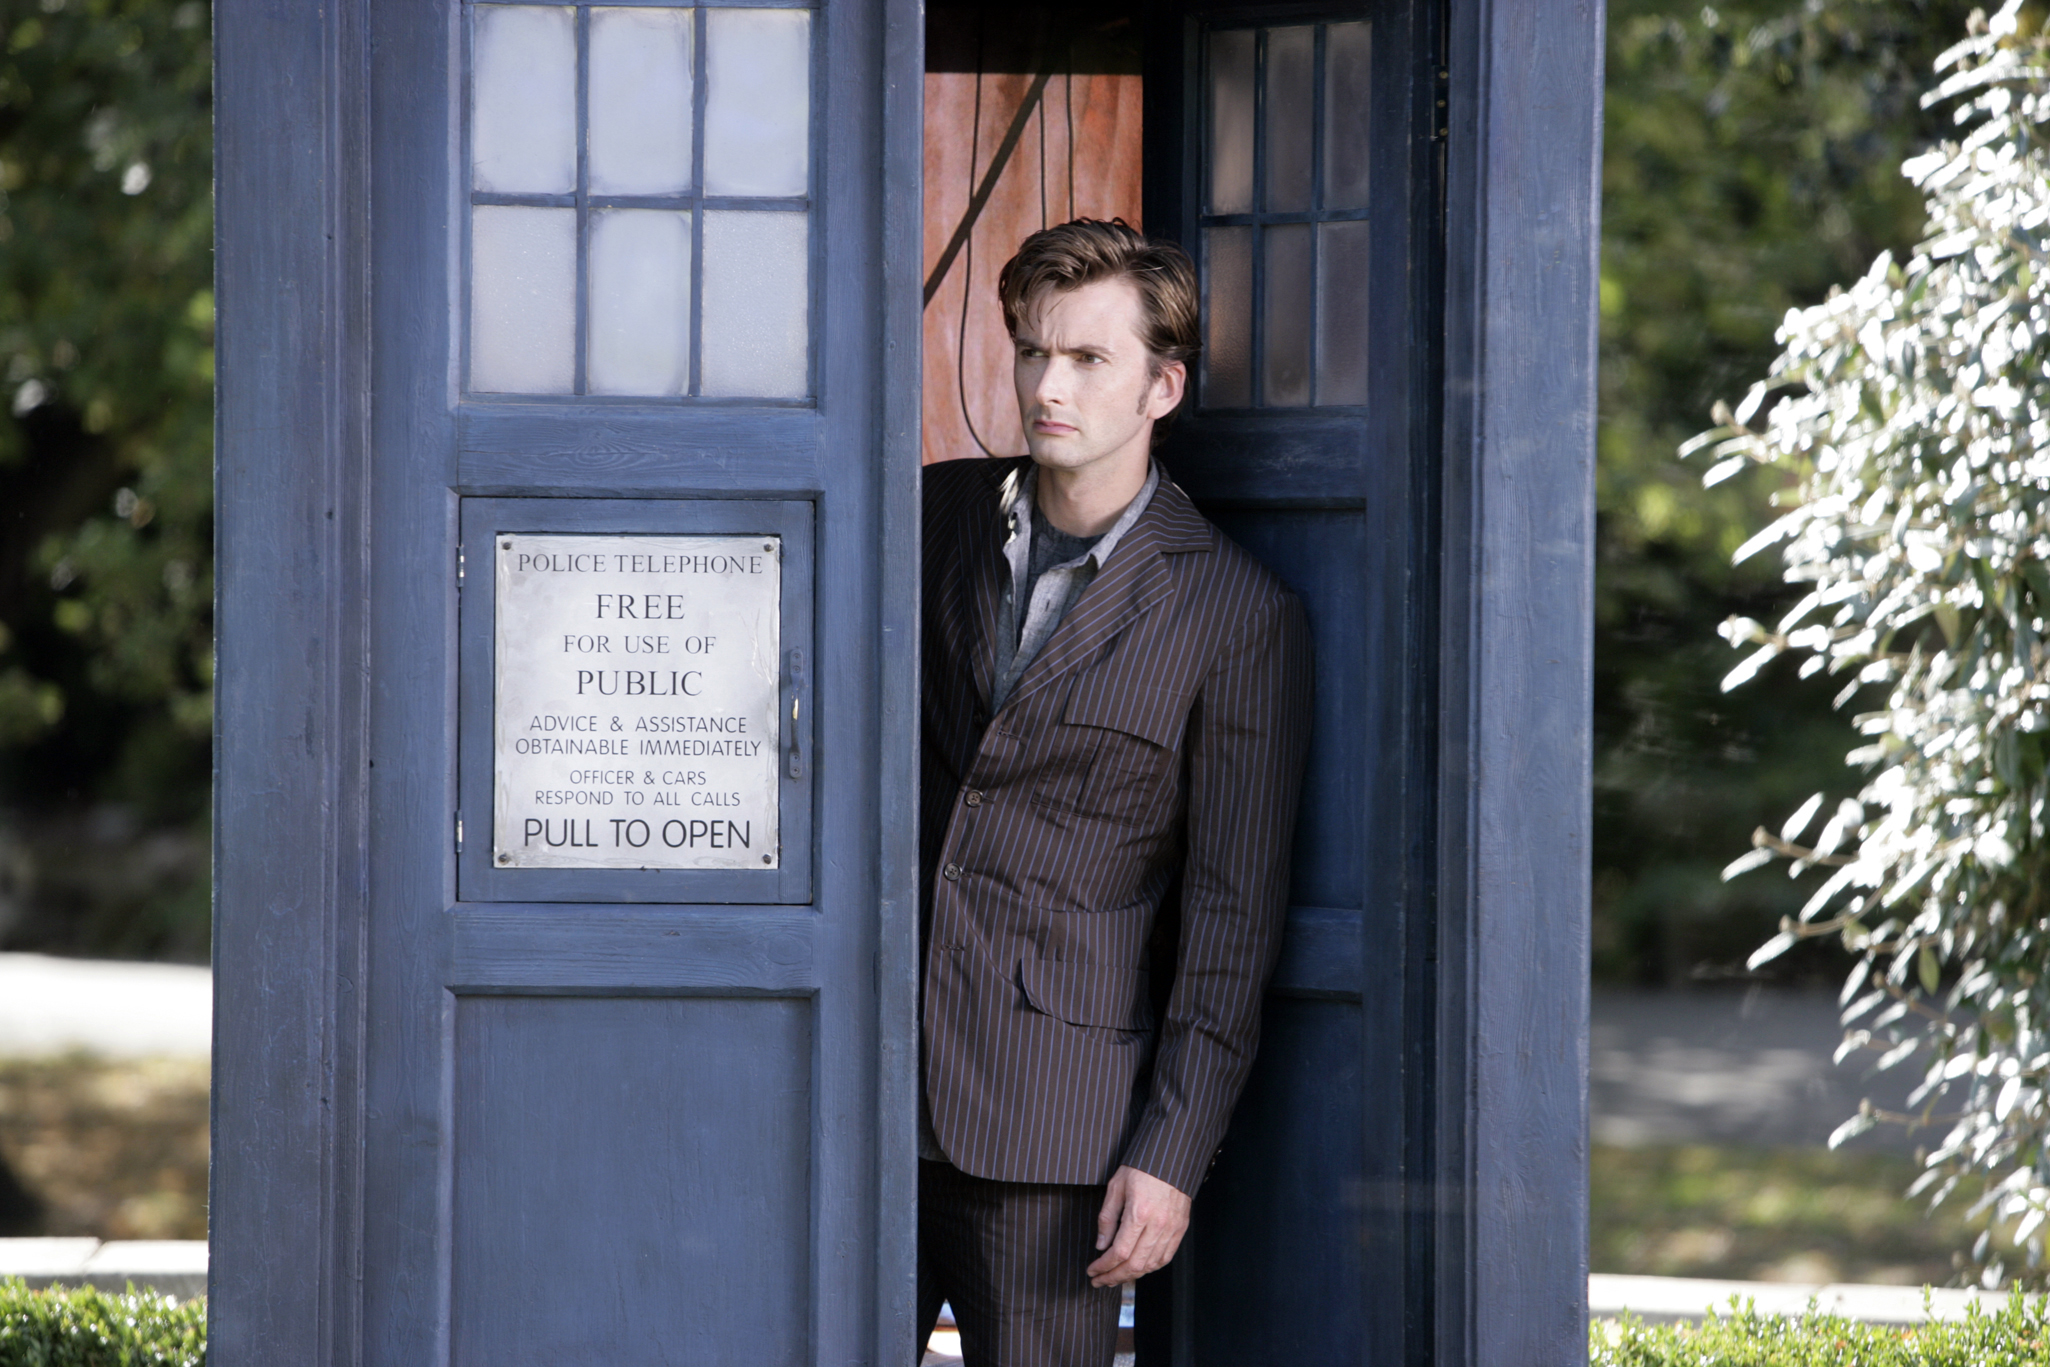 tardis, doctor who, tv show